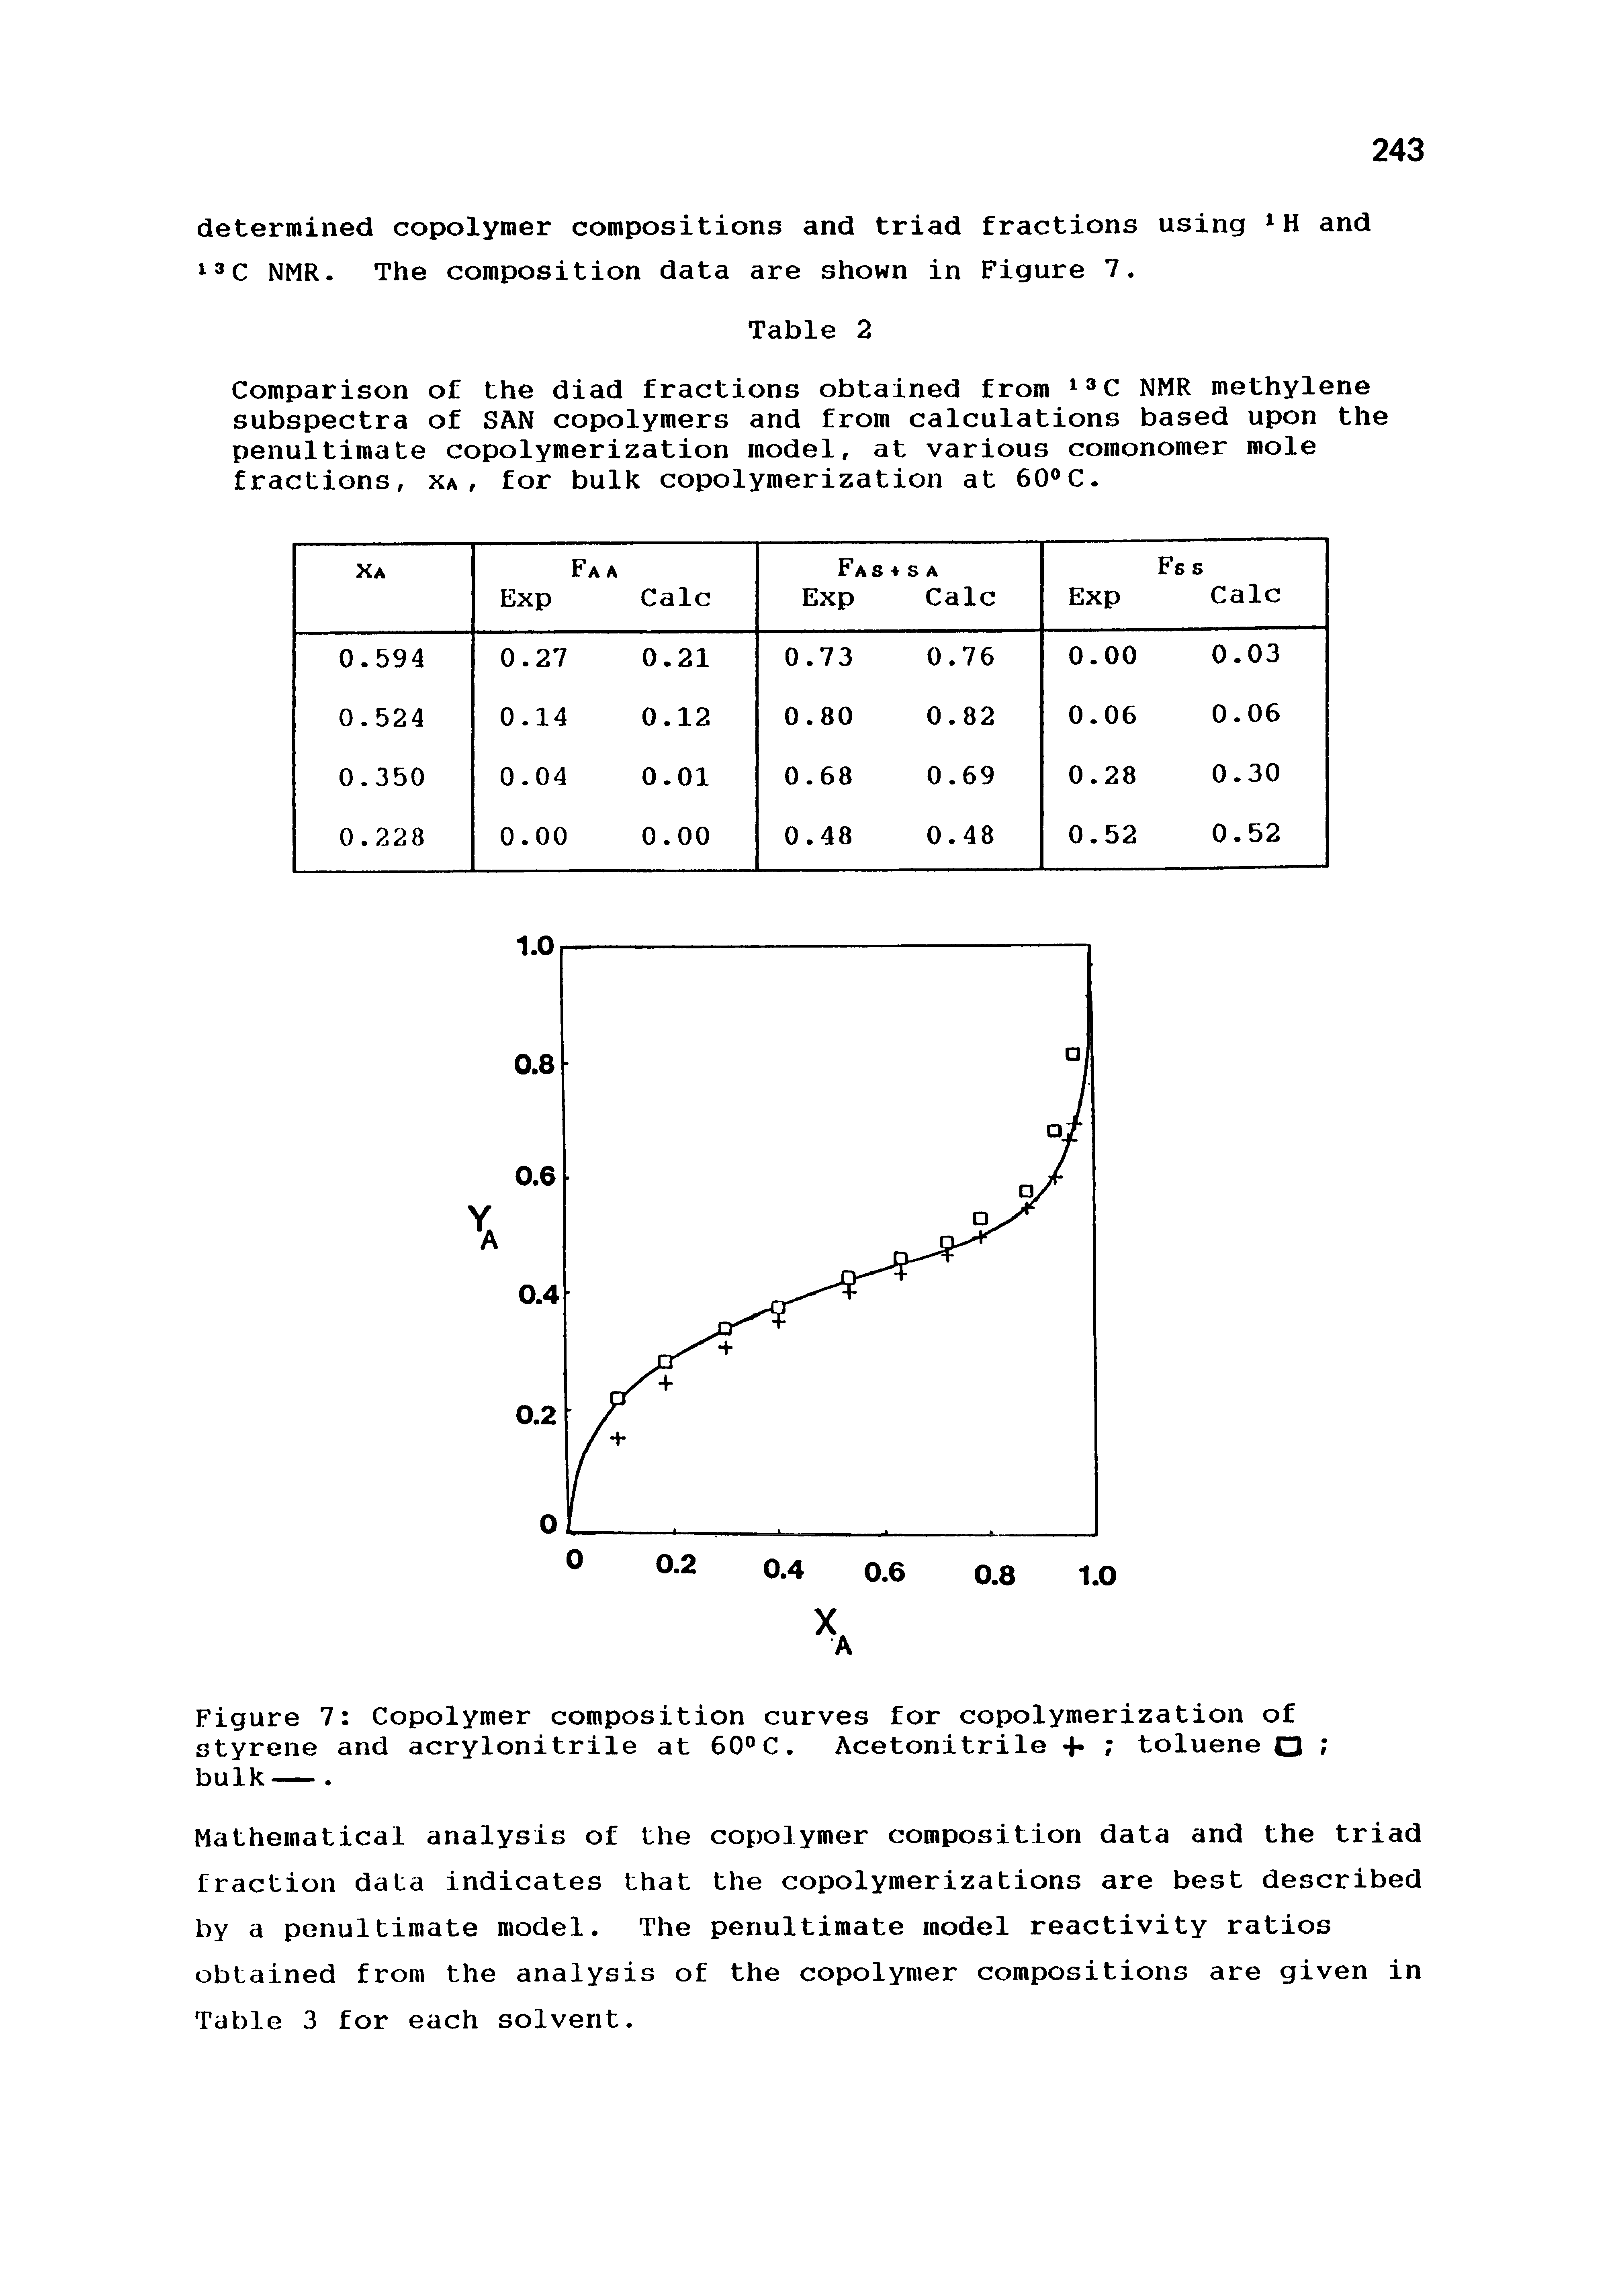 Figure 7 Copolymer composition curves for copolymerization of styrene and acrylonitrile at 60 C. Acetonitrile 4- i toluene Q bulk----...